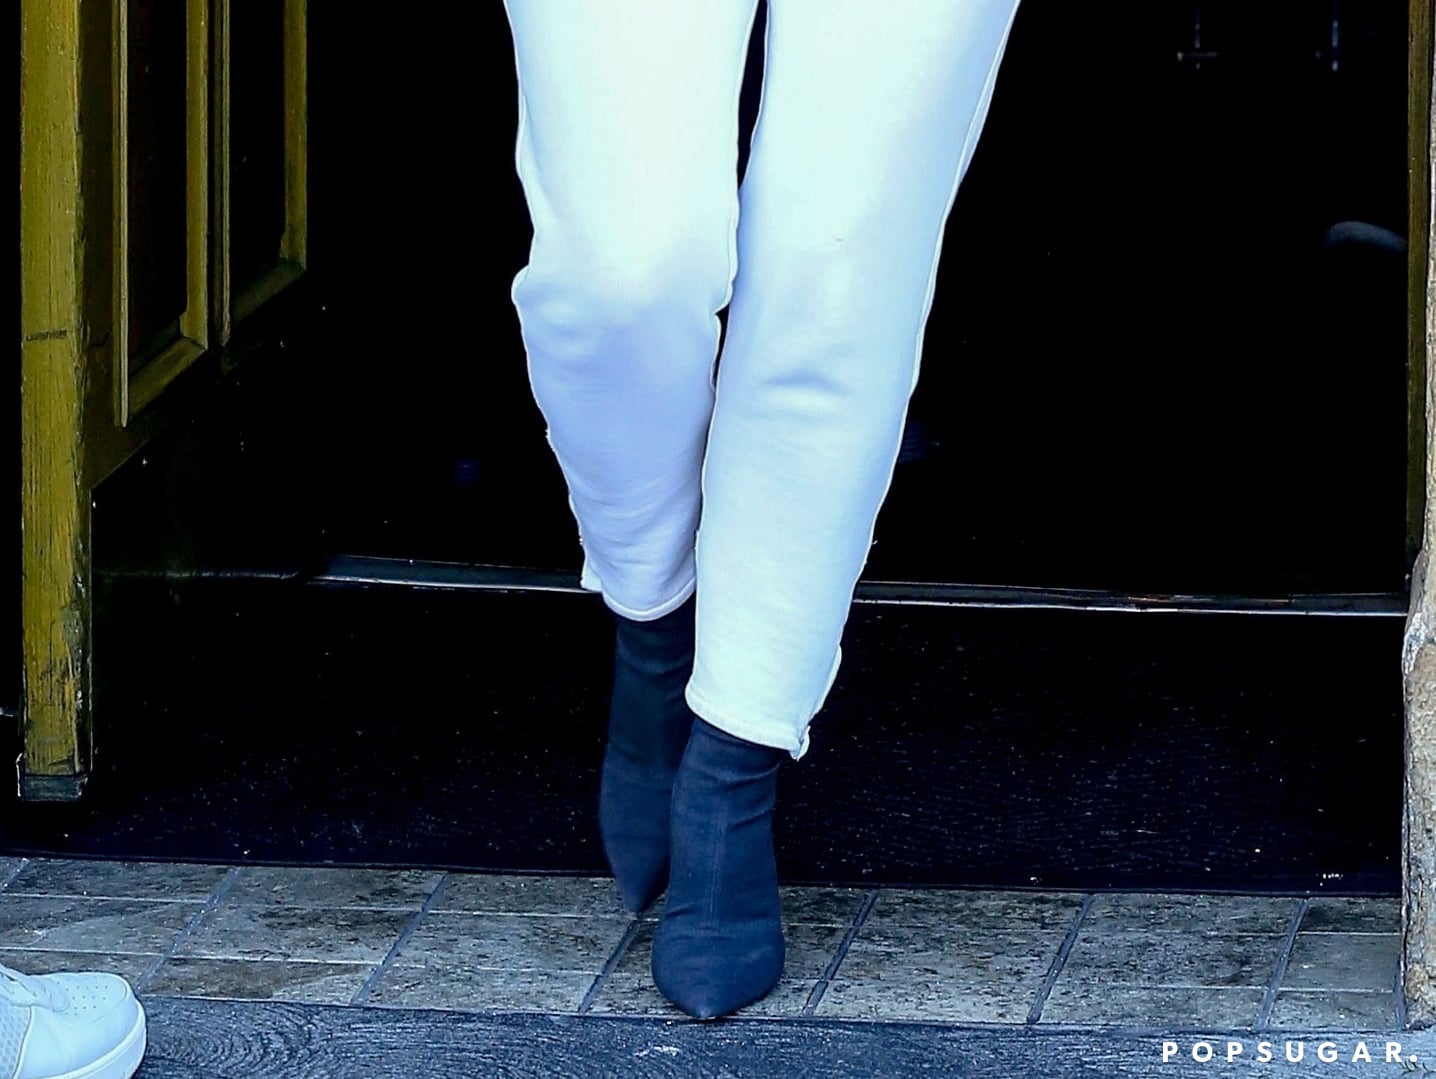 Who made Kim Kardashian's white sweatpants and sneakers?